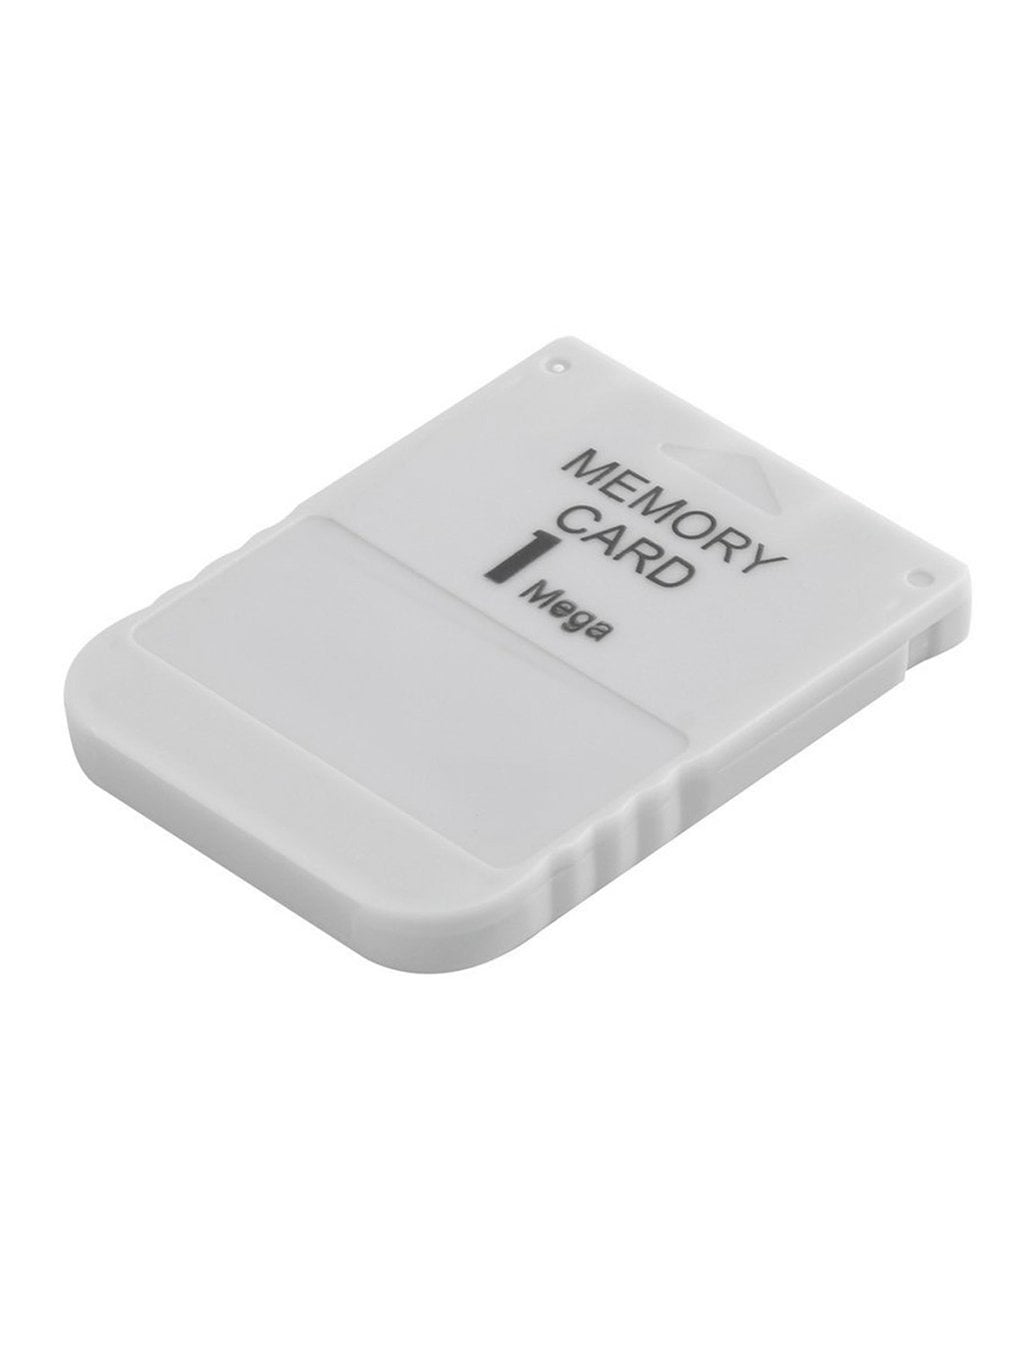 PS1 Memory Card 1 Mega Memory Card For PS1 PSX Game Useful Practical Afforda Y1